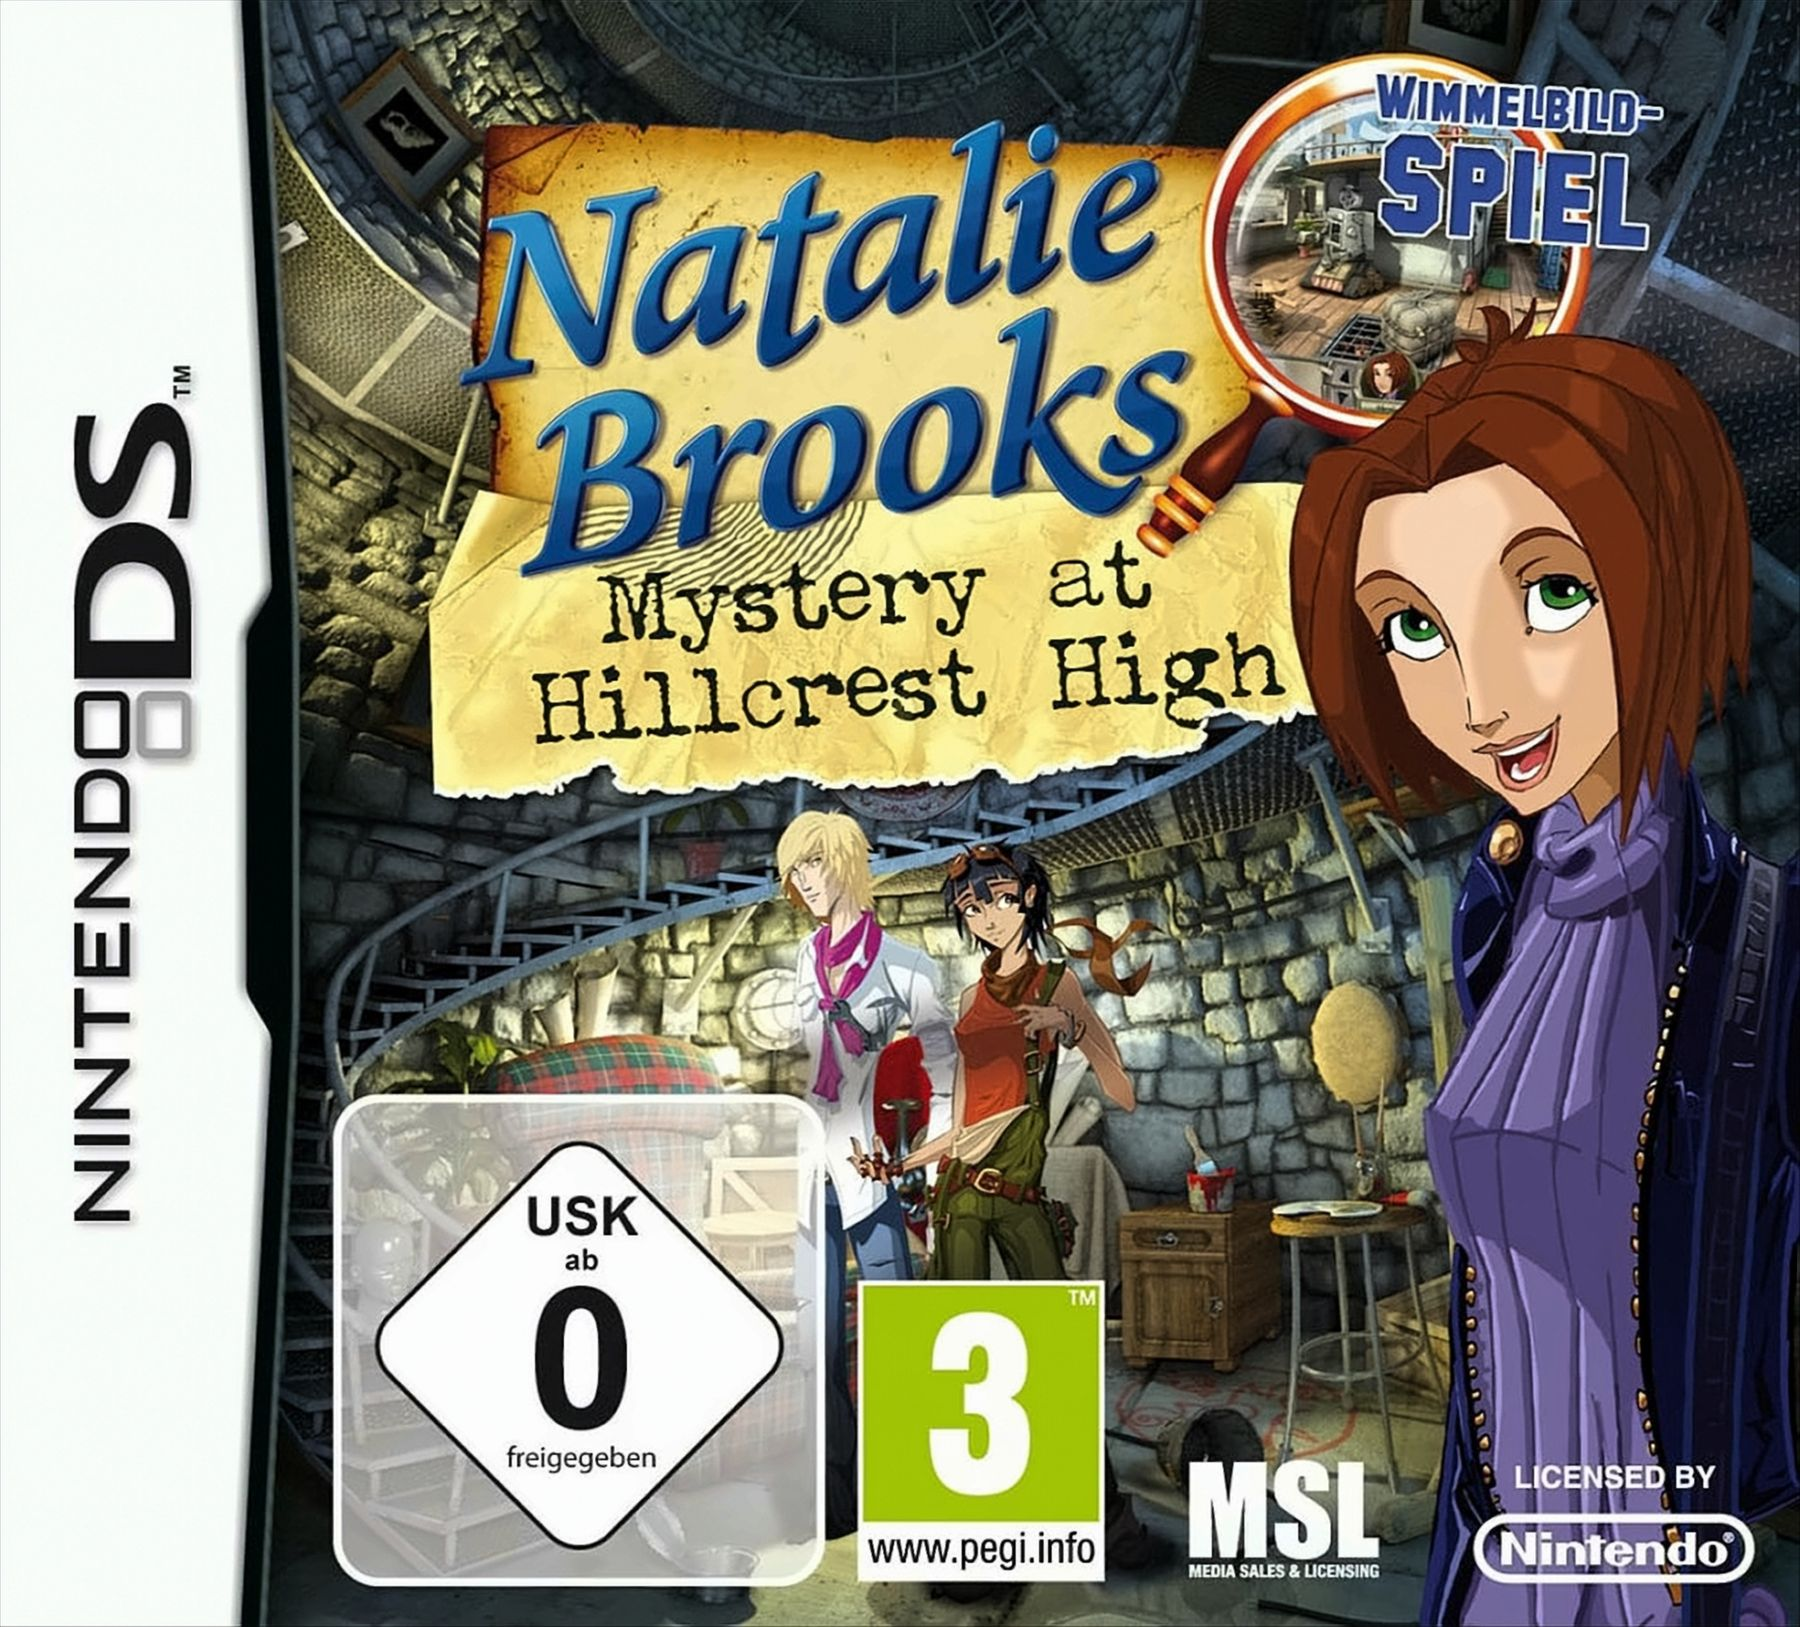 Natalie [Nintendo - Brooks: Mystery DS] High At Hillcrest